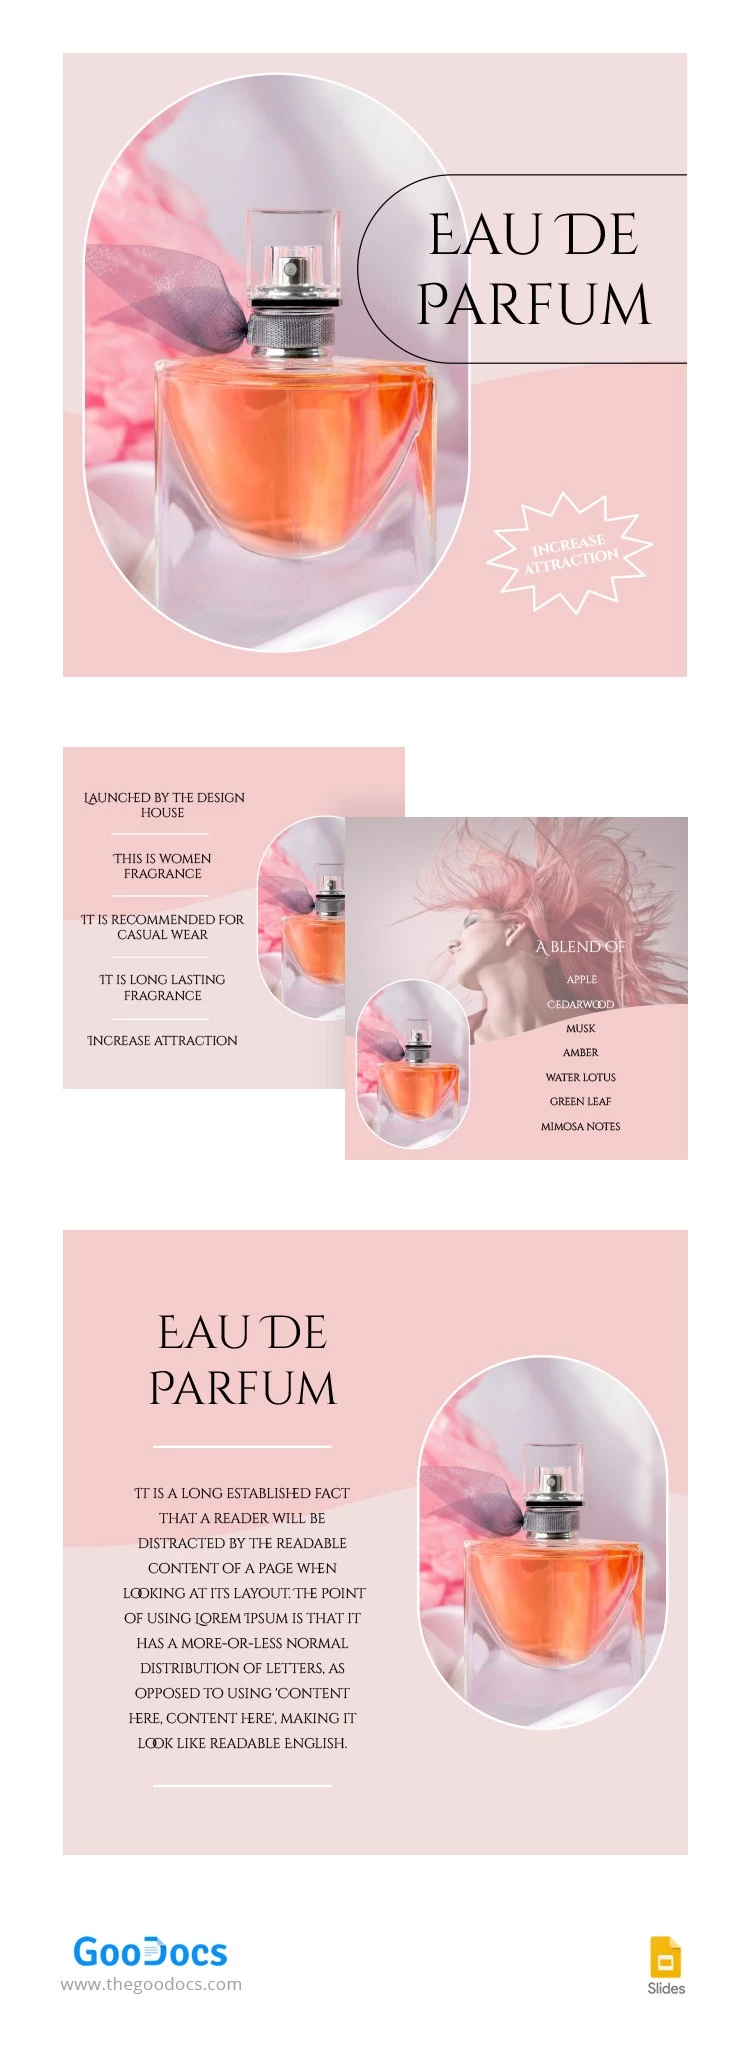 Attraente Eau De Parfum prodotto Amazon - free Google Docs Template - 10063849